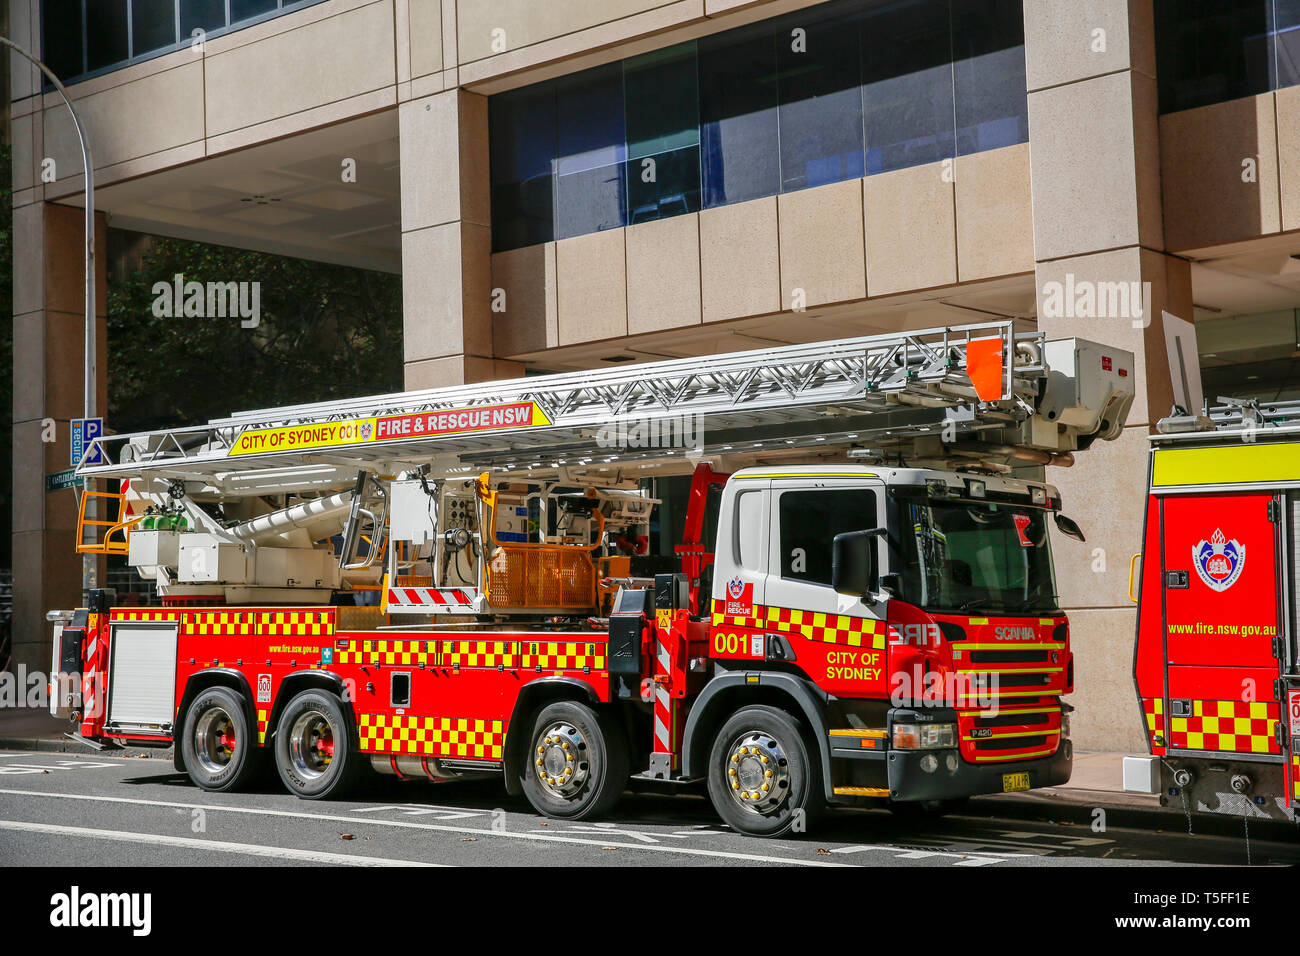 NSW City of Sydney fire brigade truck engine parked in Sydney city centre,Australia Stock Photo